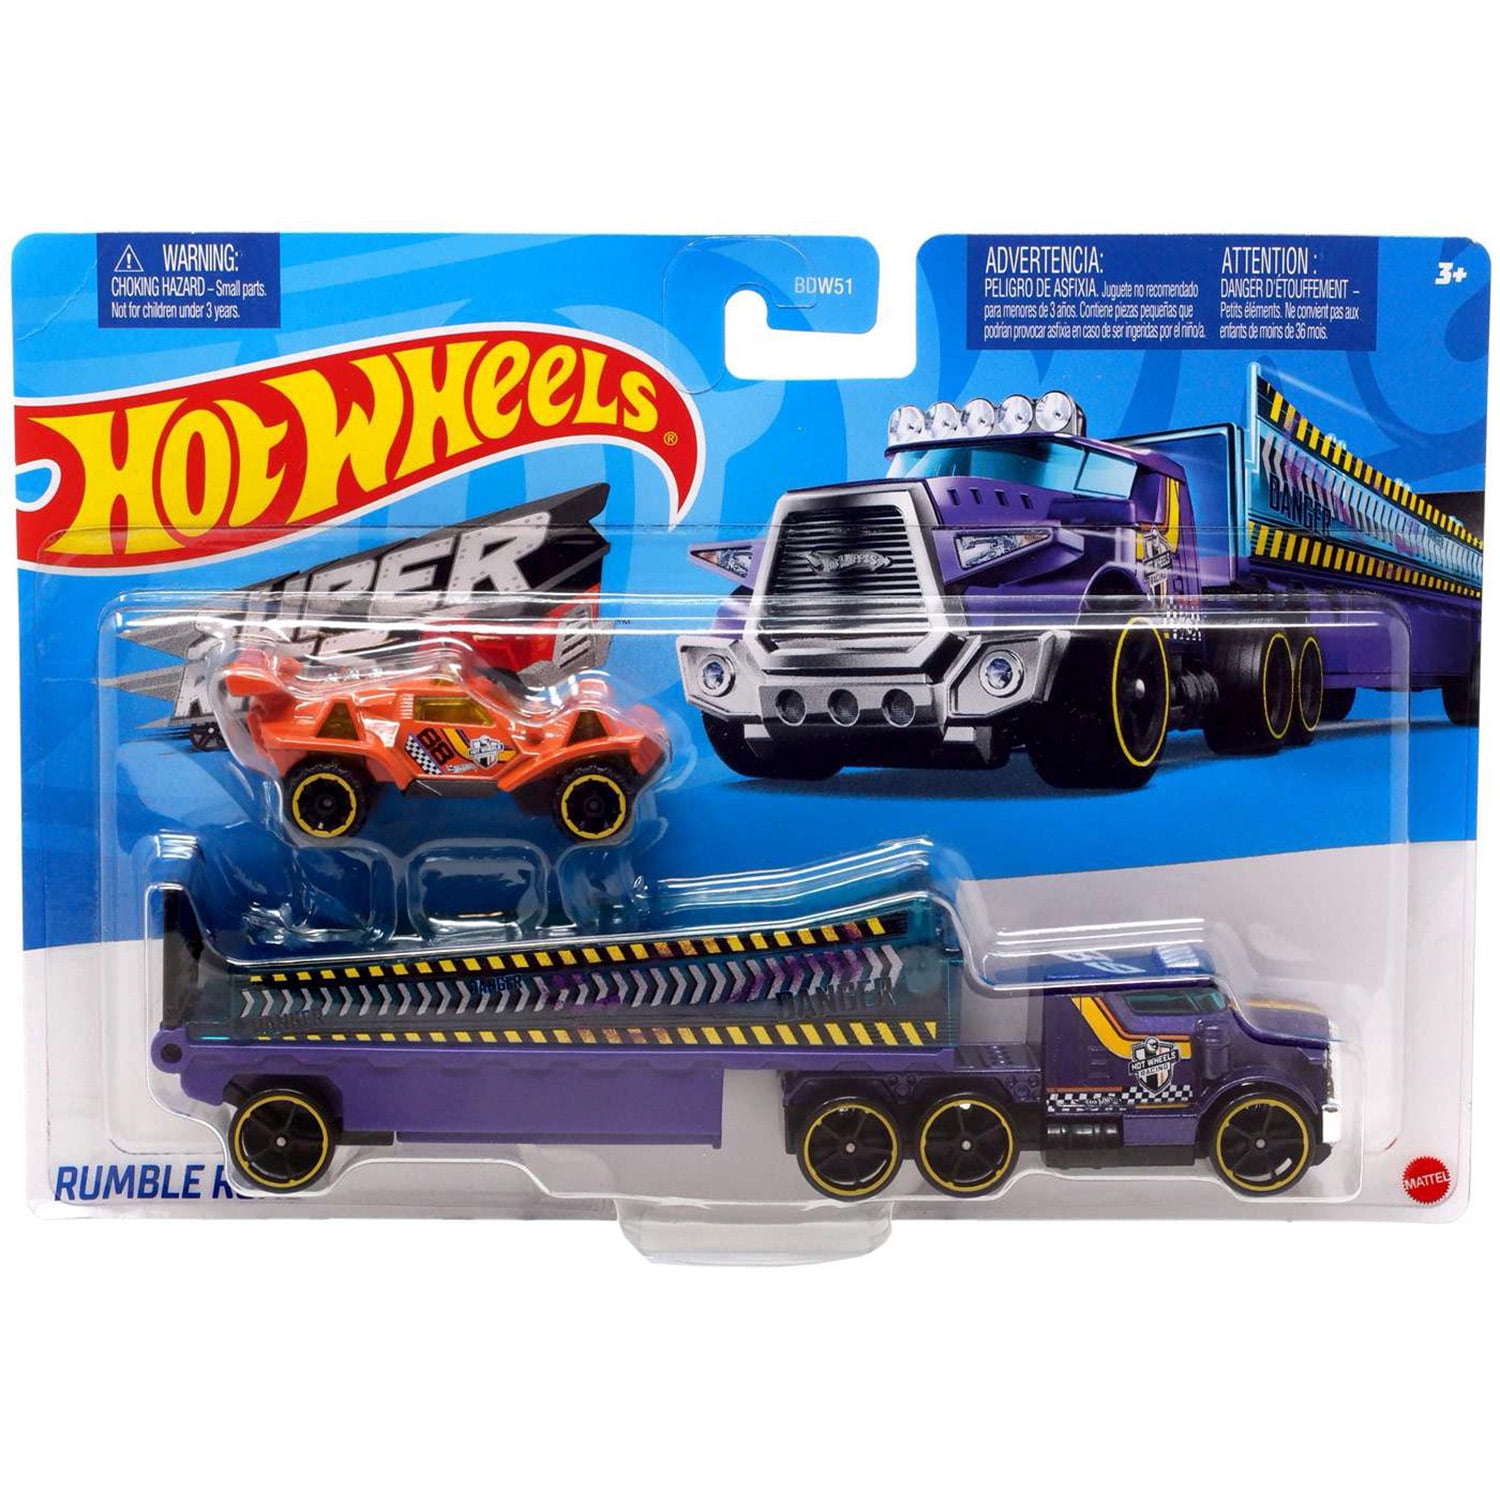 Hot Wheels Track Set, Spiral Speed Crash with Car